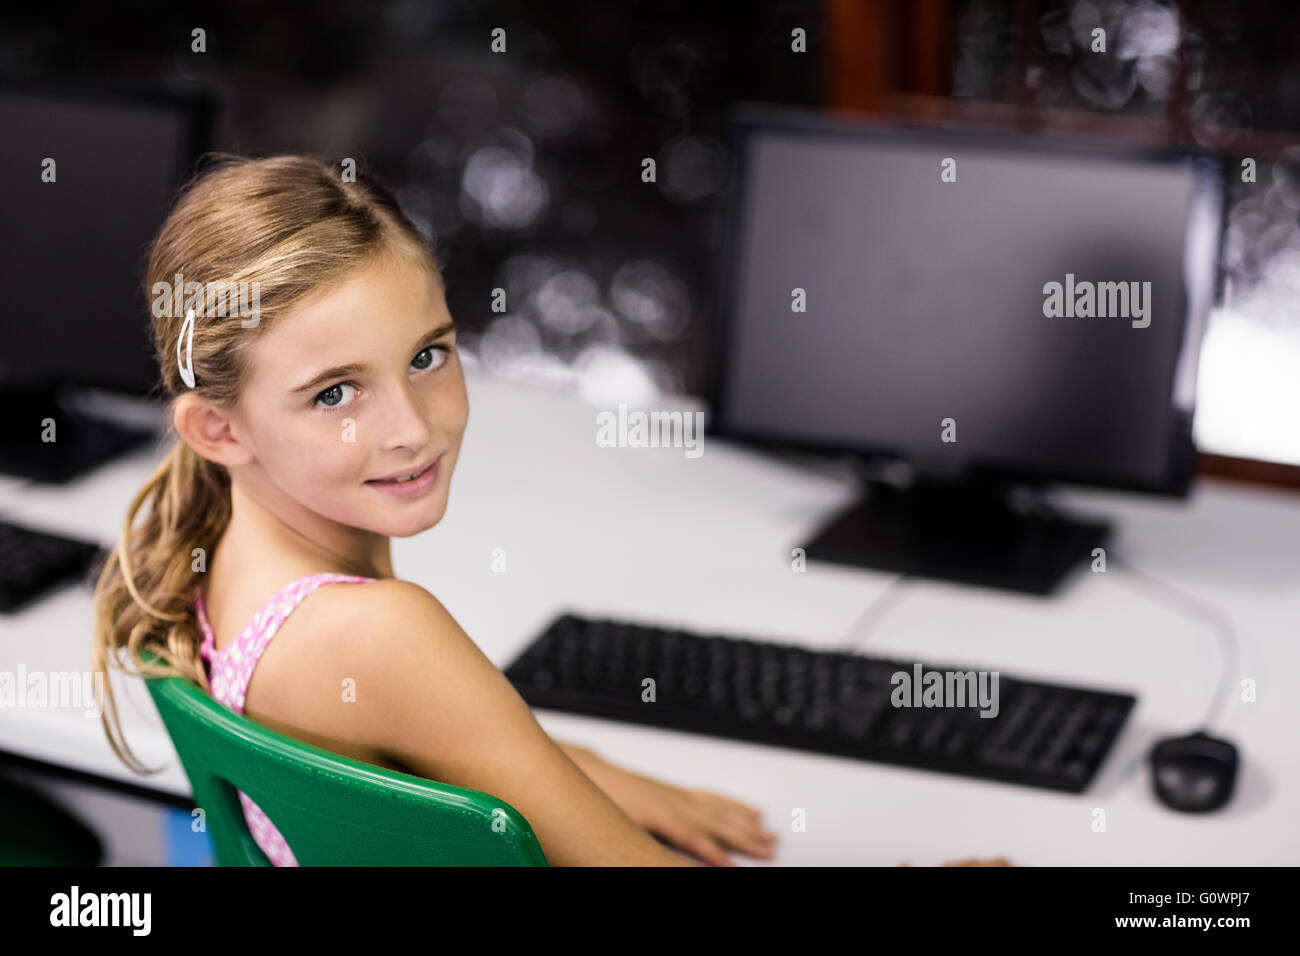 Children using technology Stock Photo